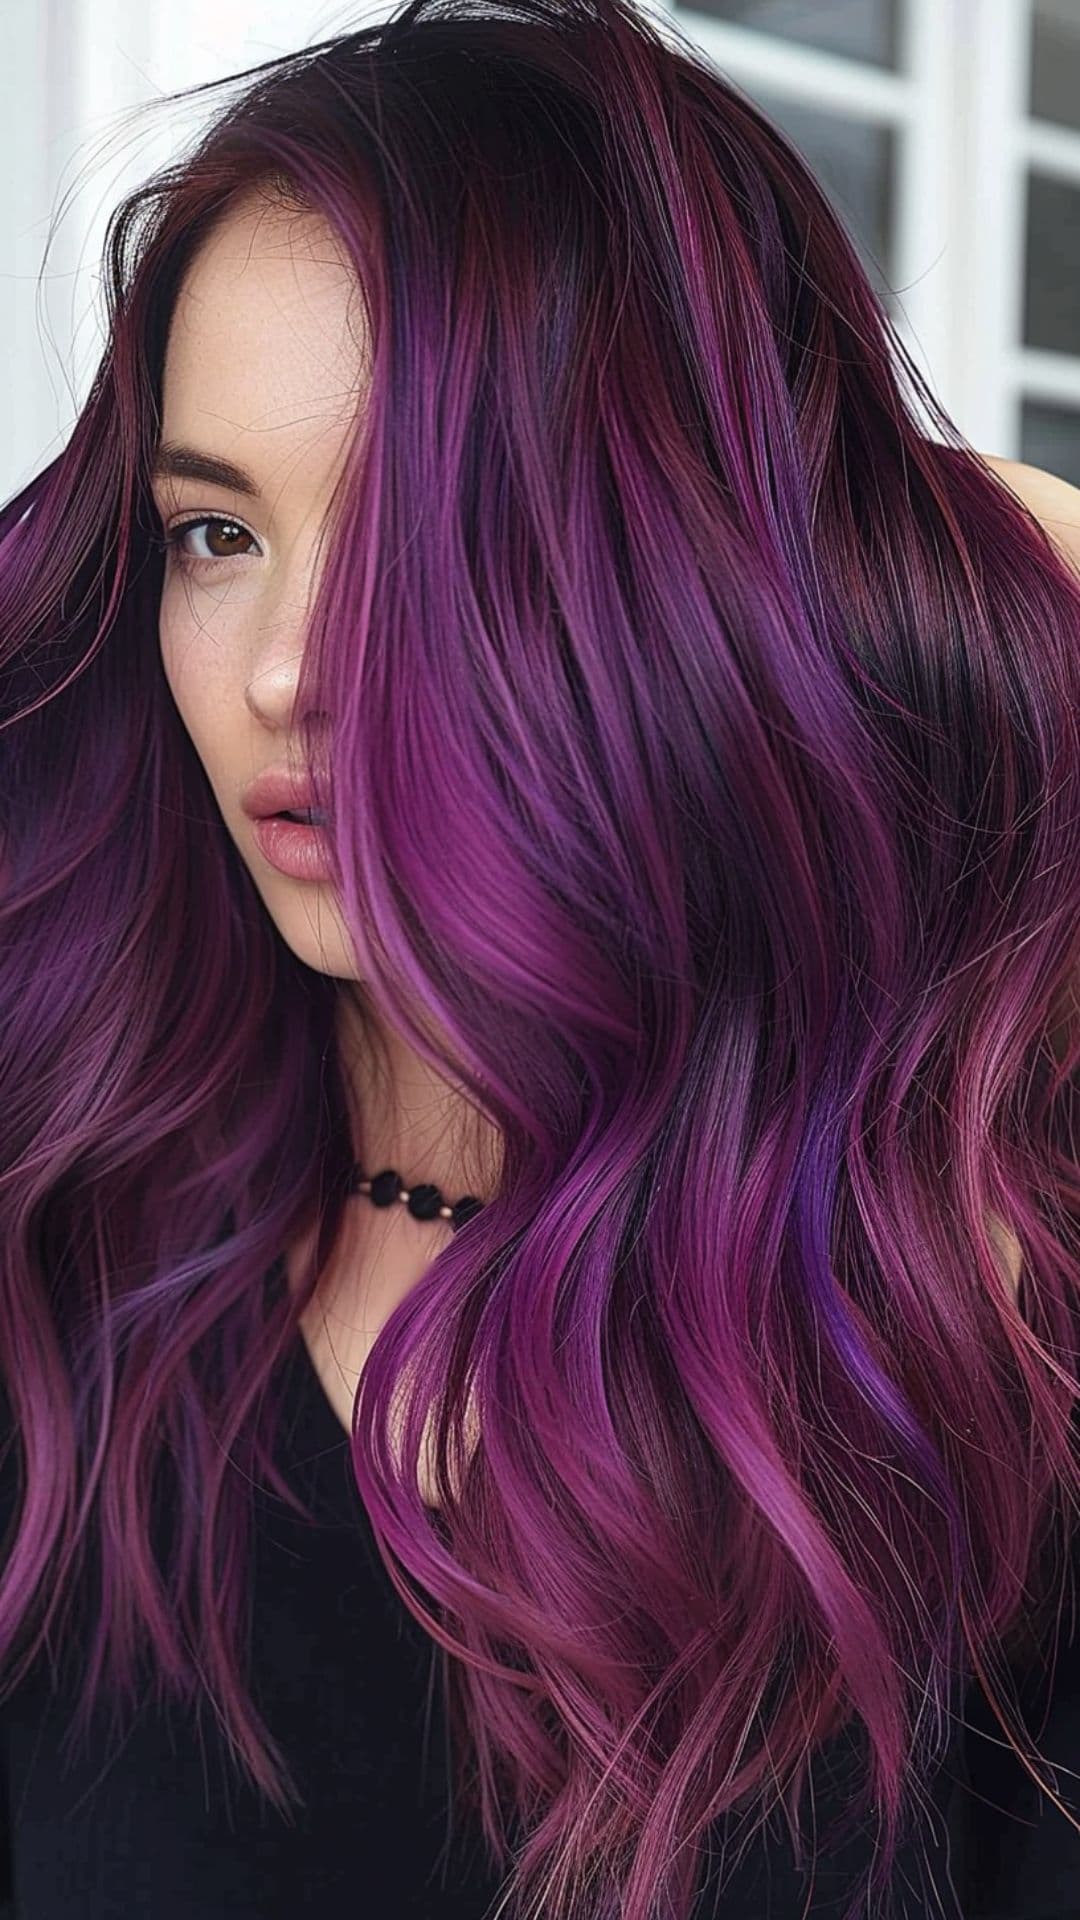 A woman modelling a warm toned purple hair.